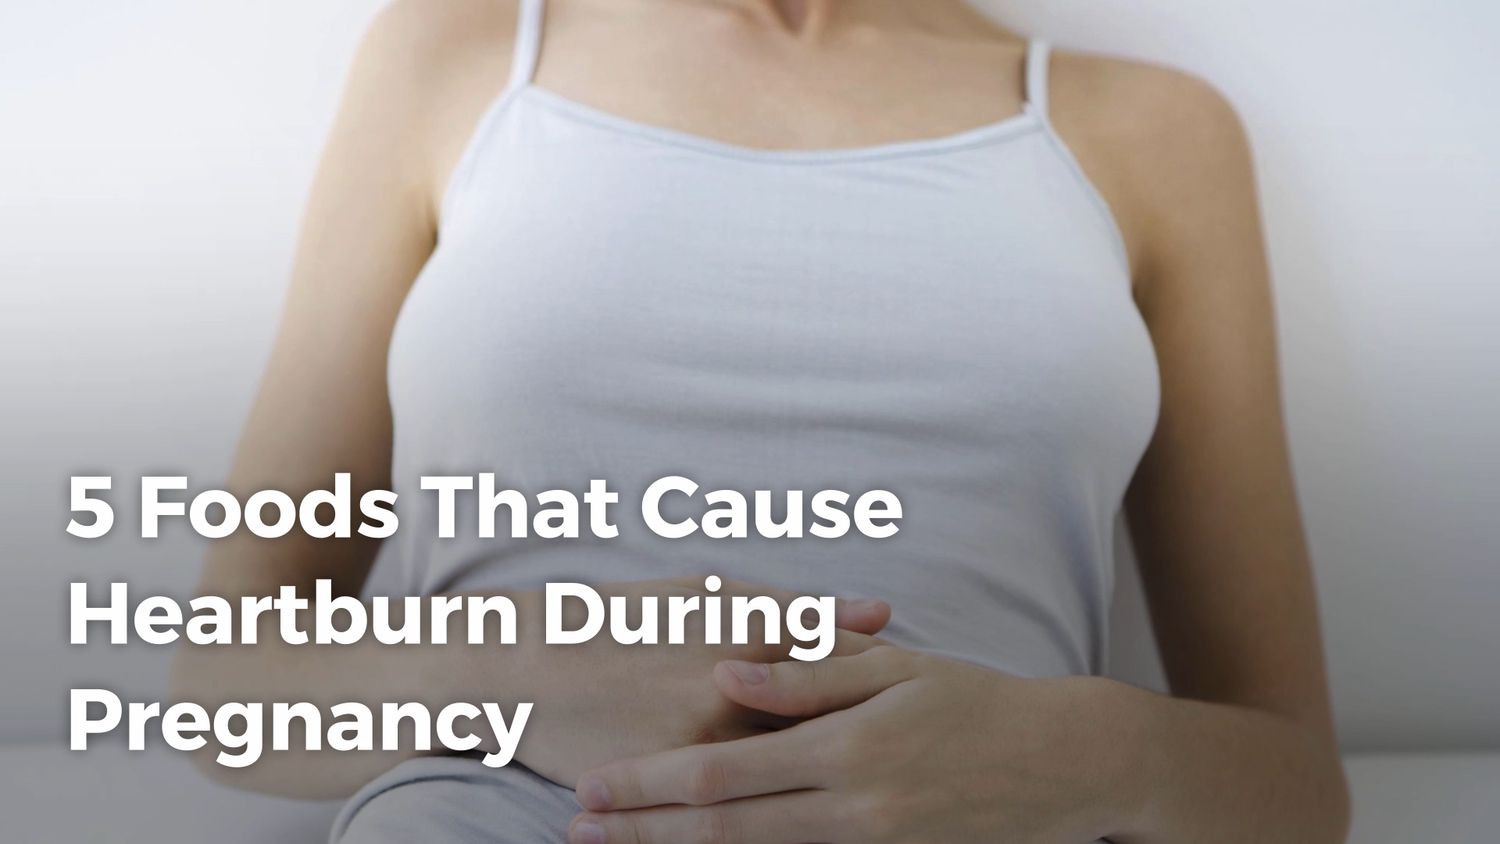 Acid reflux in early pregnancy